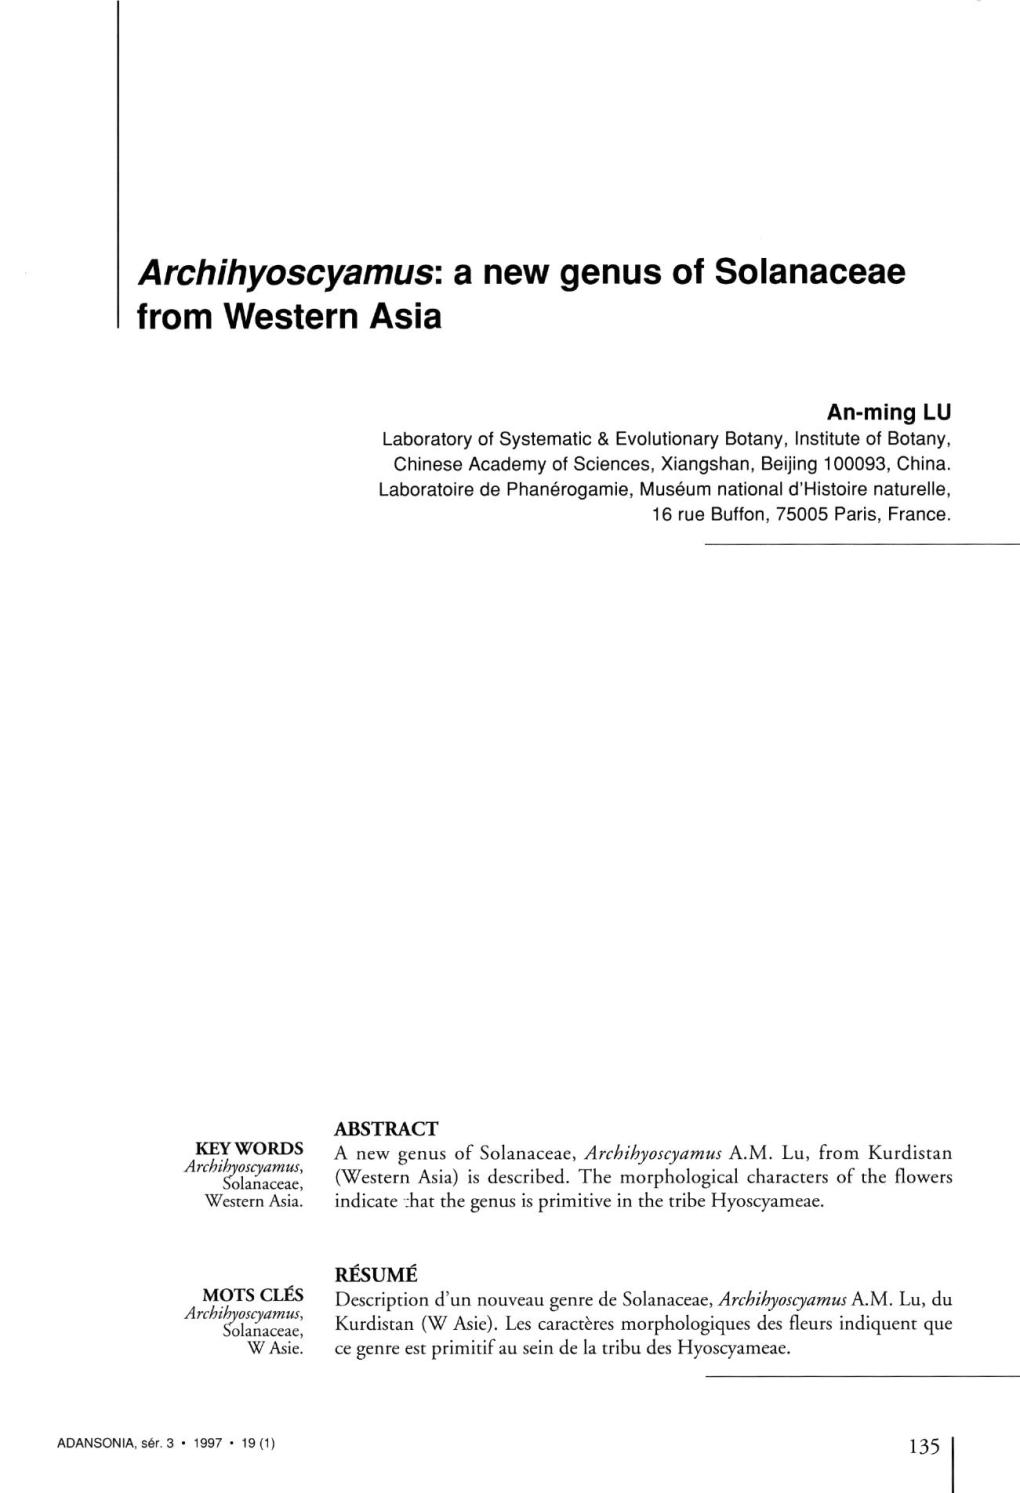 Archihyoscyamus: a New Genus of Solanaceae from Western Asia